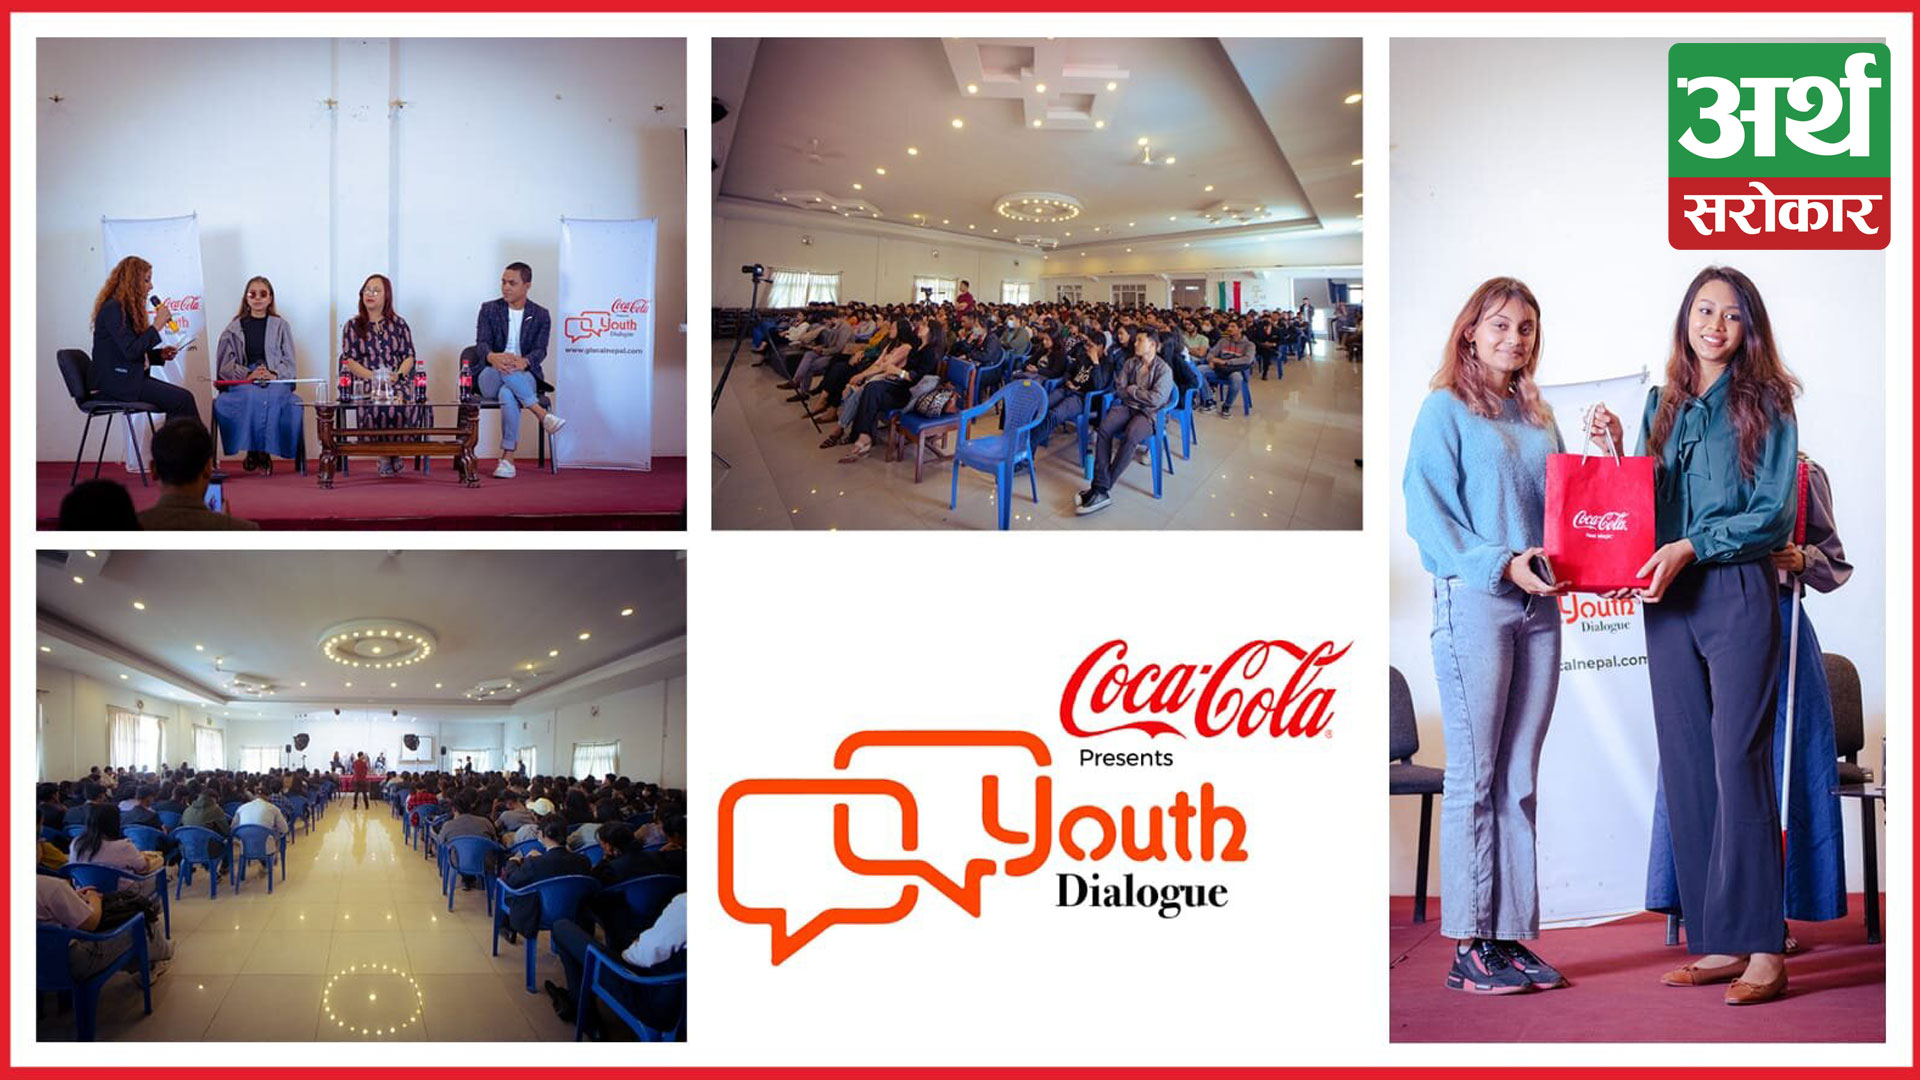 Coca-Cola Presents Youth Dialogue Event